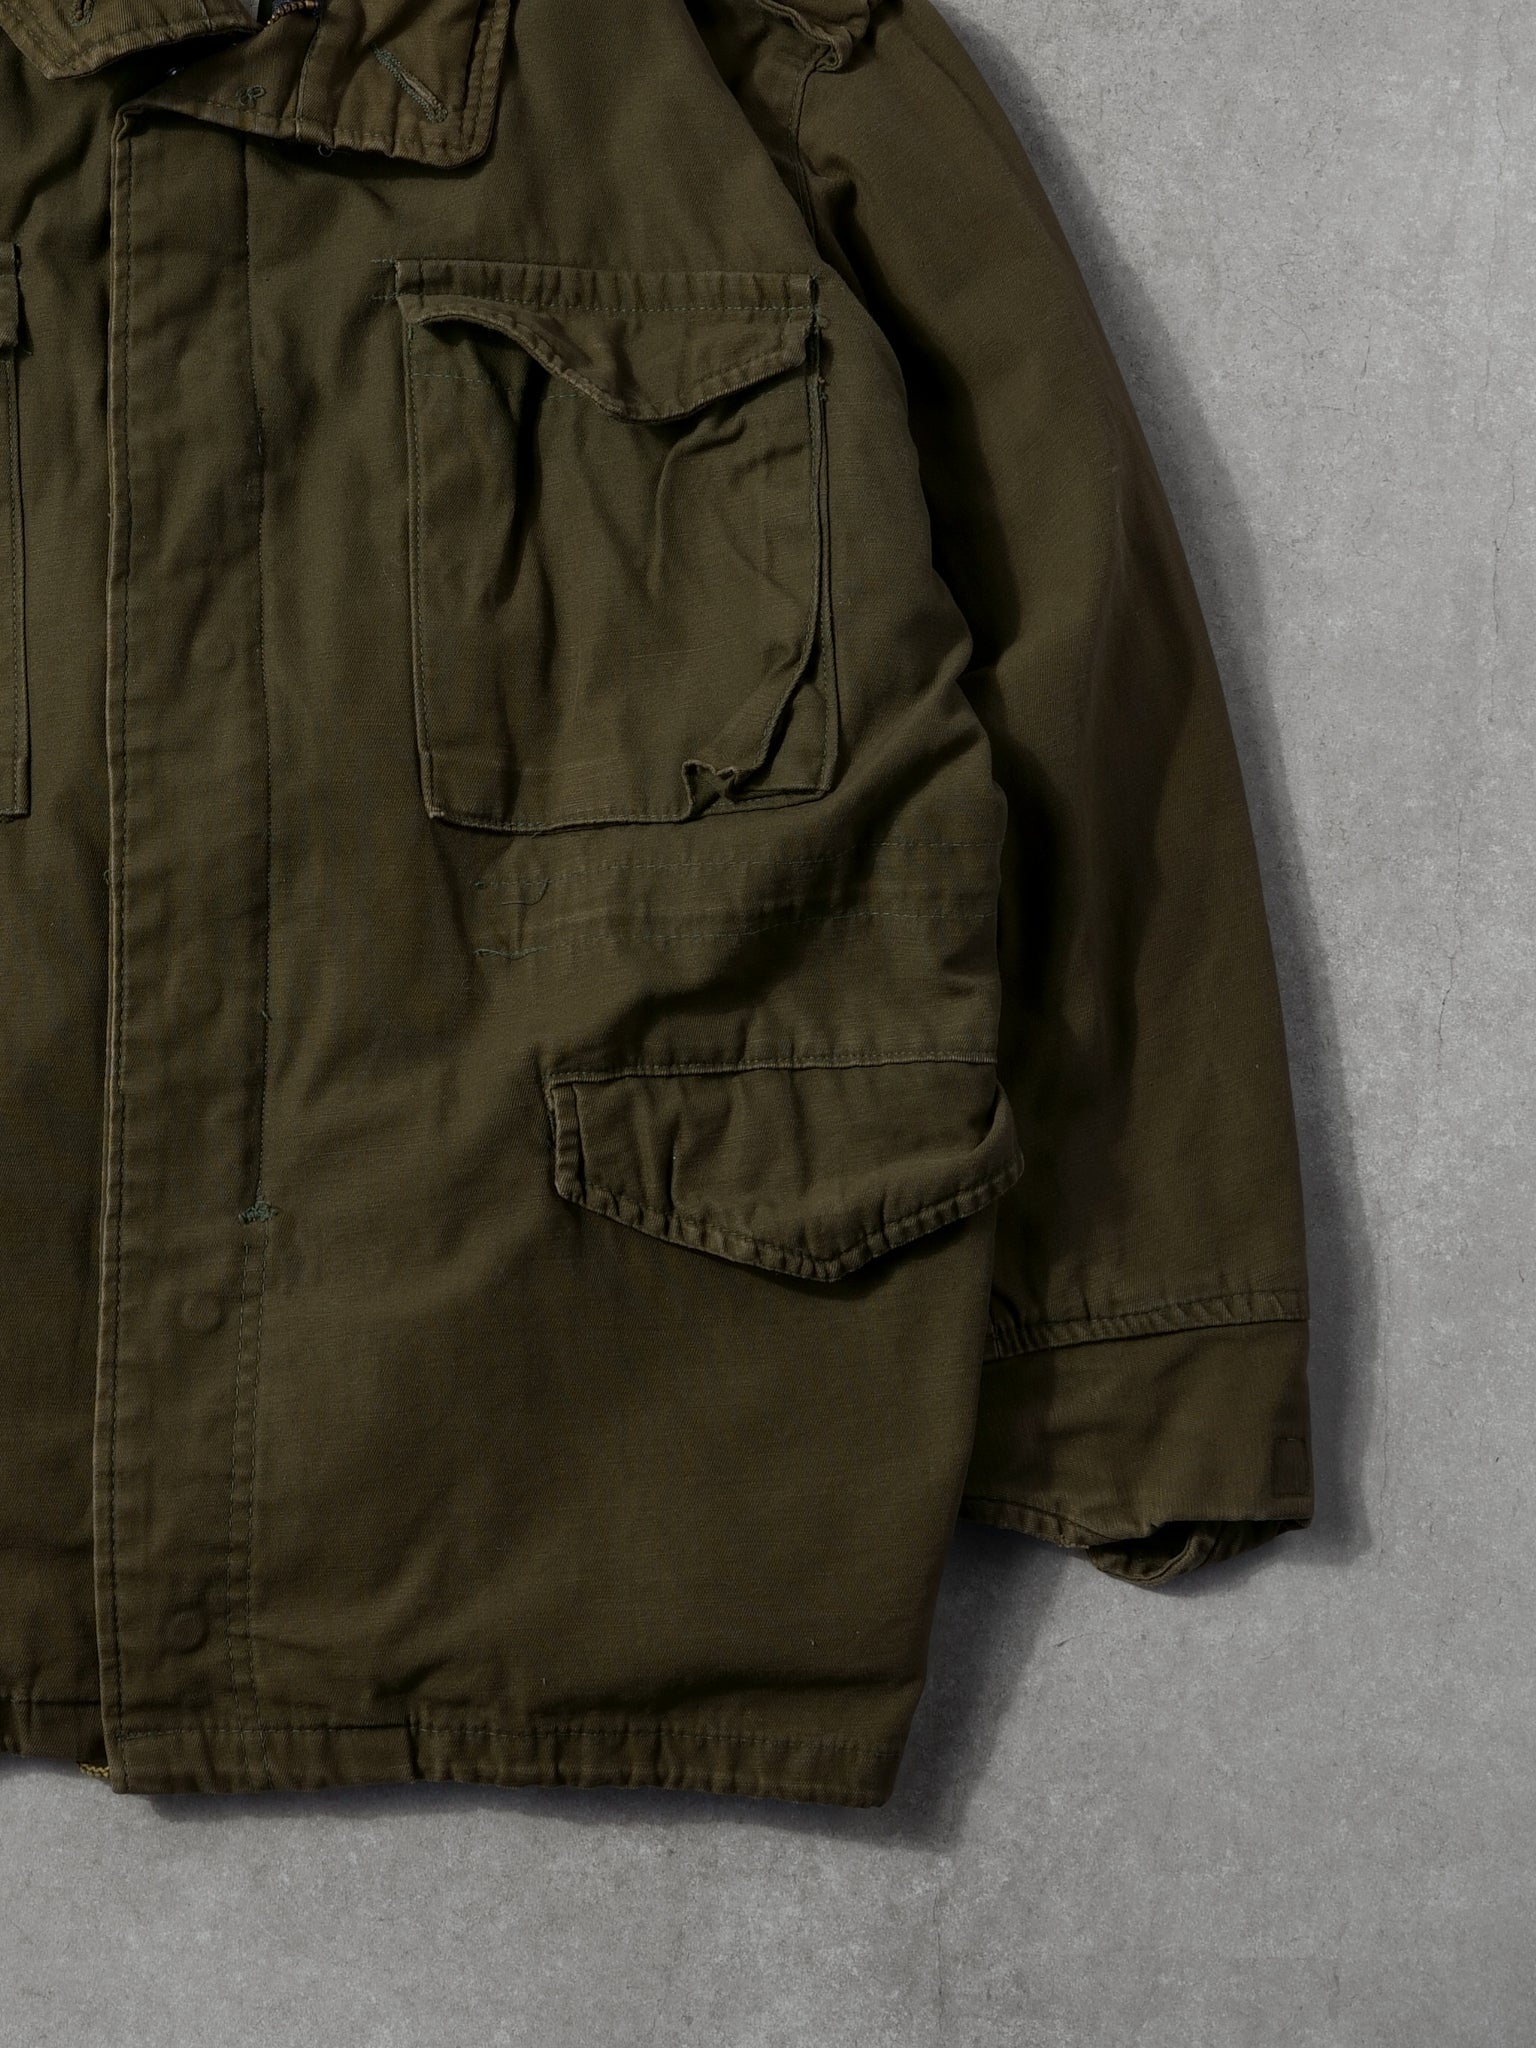 Vintage 80s Dark Moss Green Army Field Collared Jacket (XL)